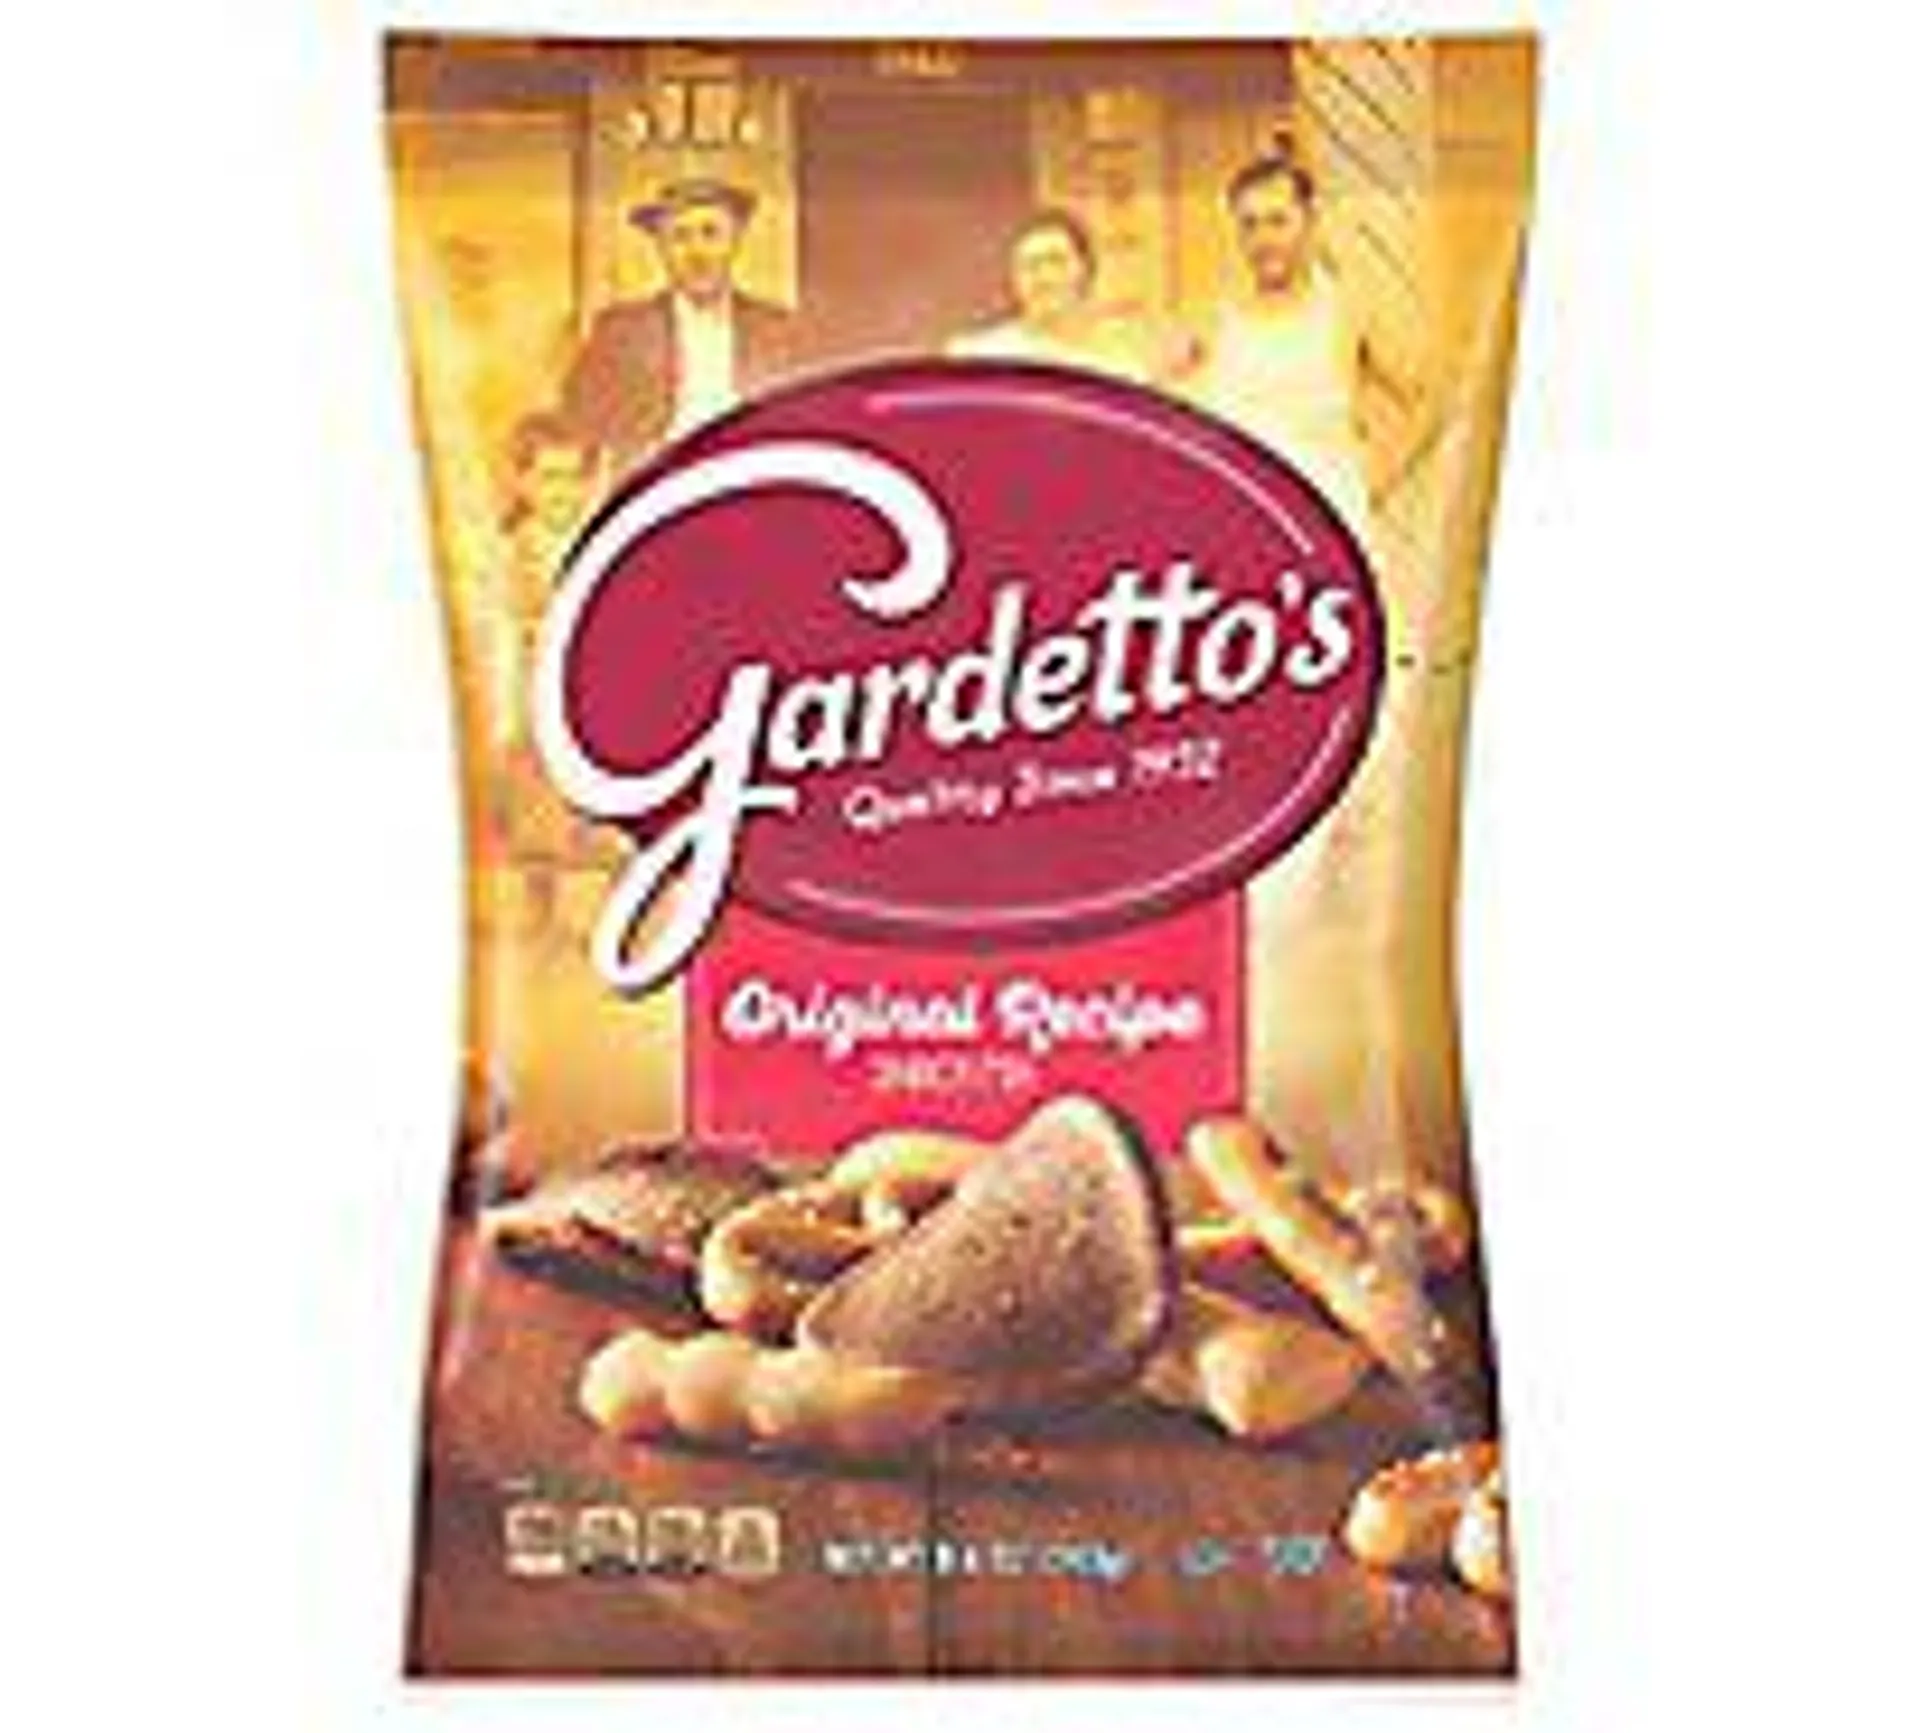 Gardetto's Original Recipe Snack Mix - 8.6 Oz